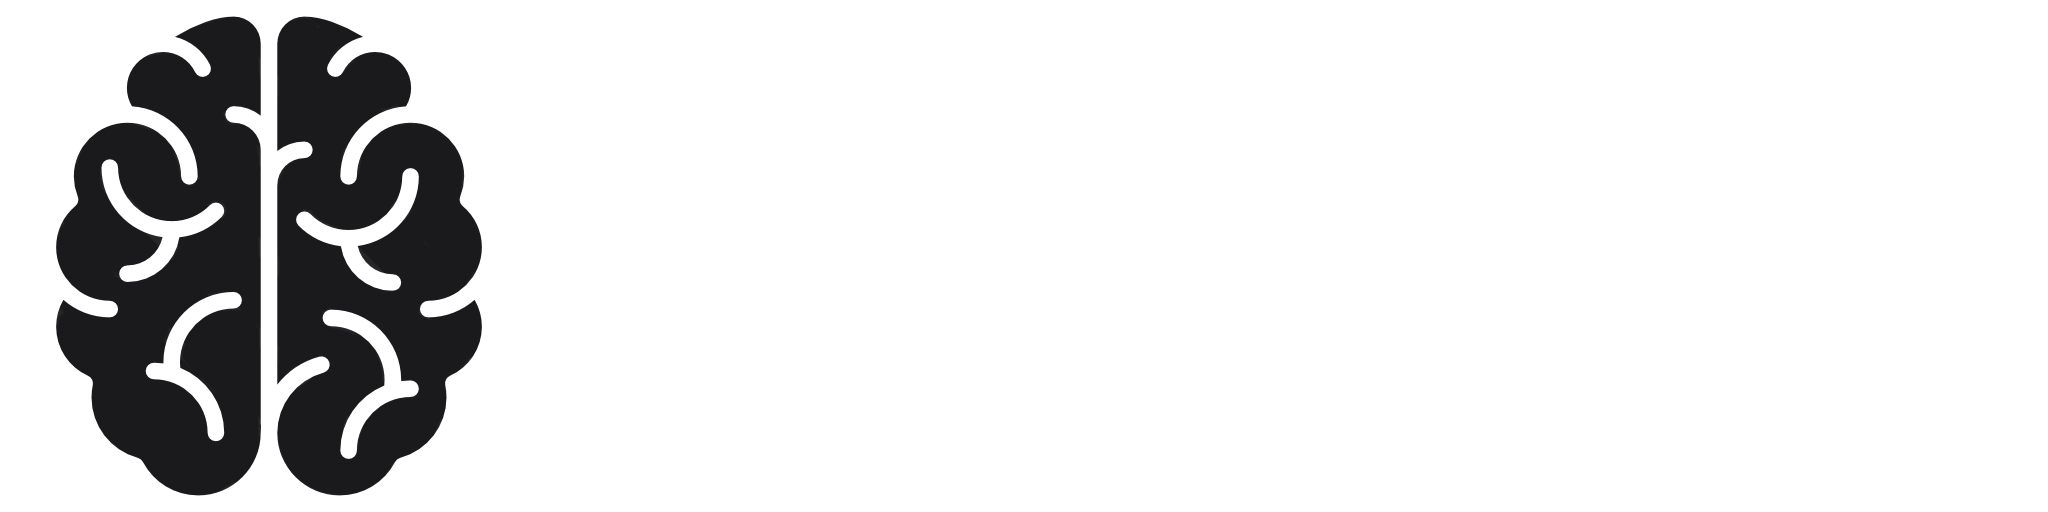 Badcog logo